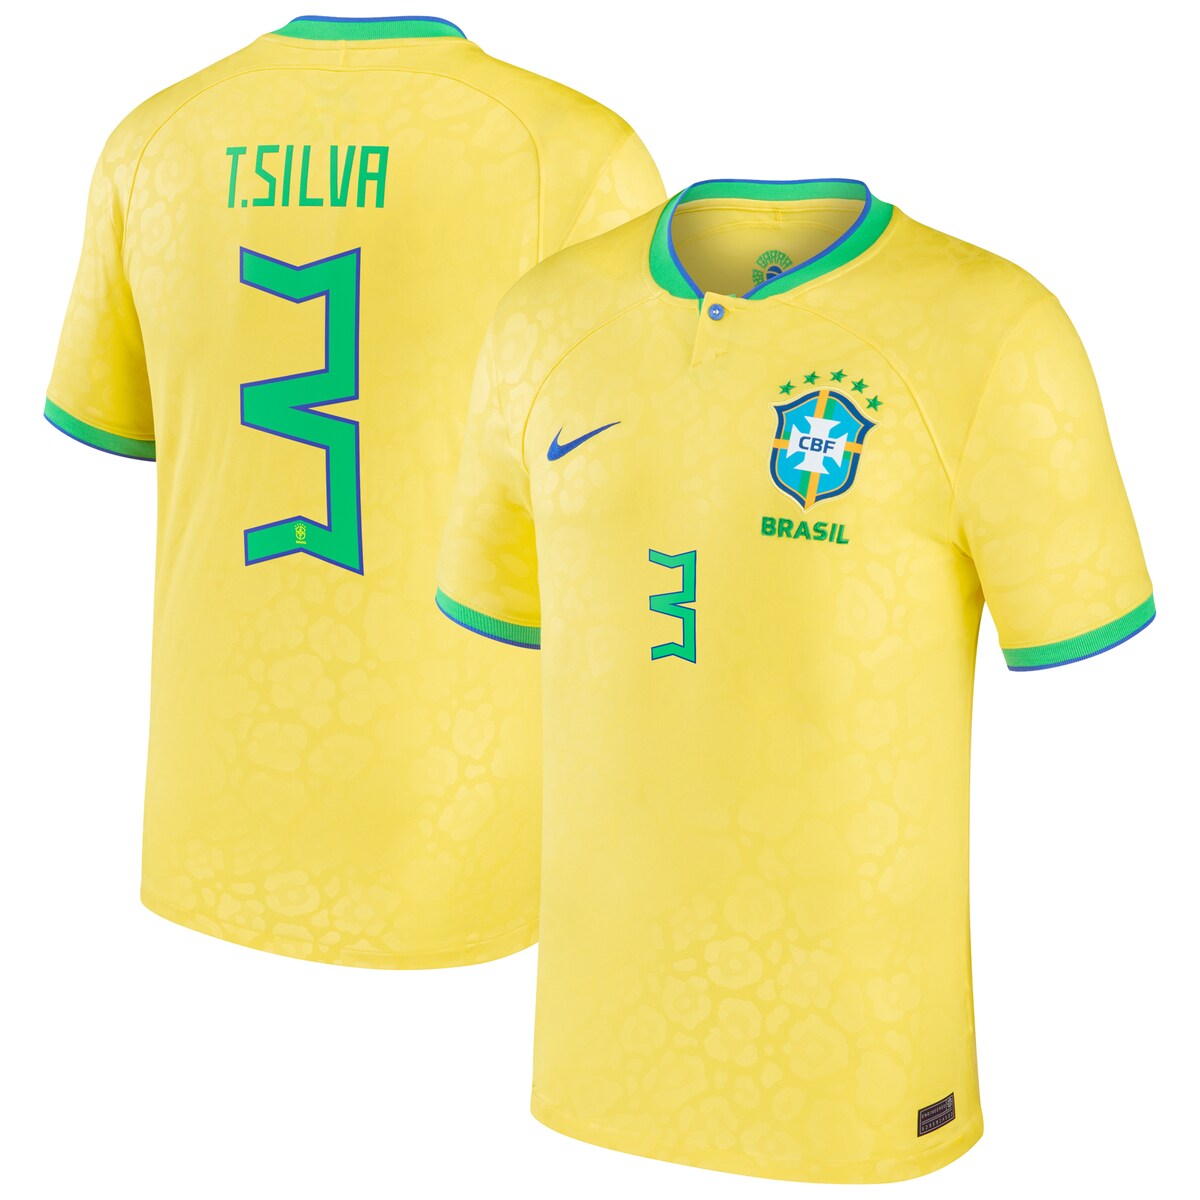 NATIONAL TEAM ブラジル代表 シウバ レプリカ ユニフォーム Nike ナイキ メンズ イエロー (15779 JERMENCRP)